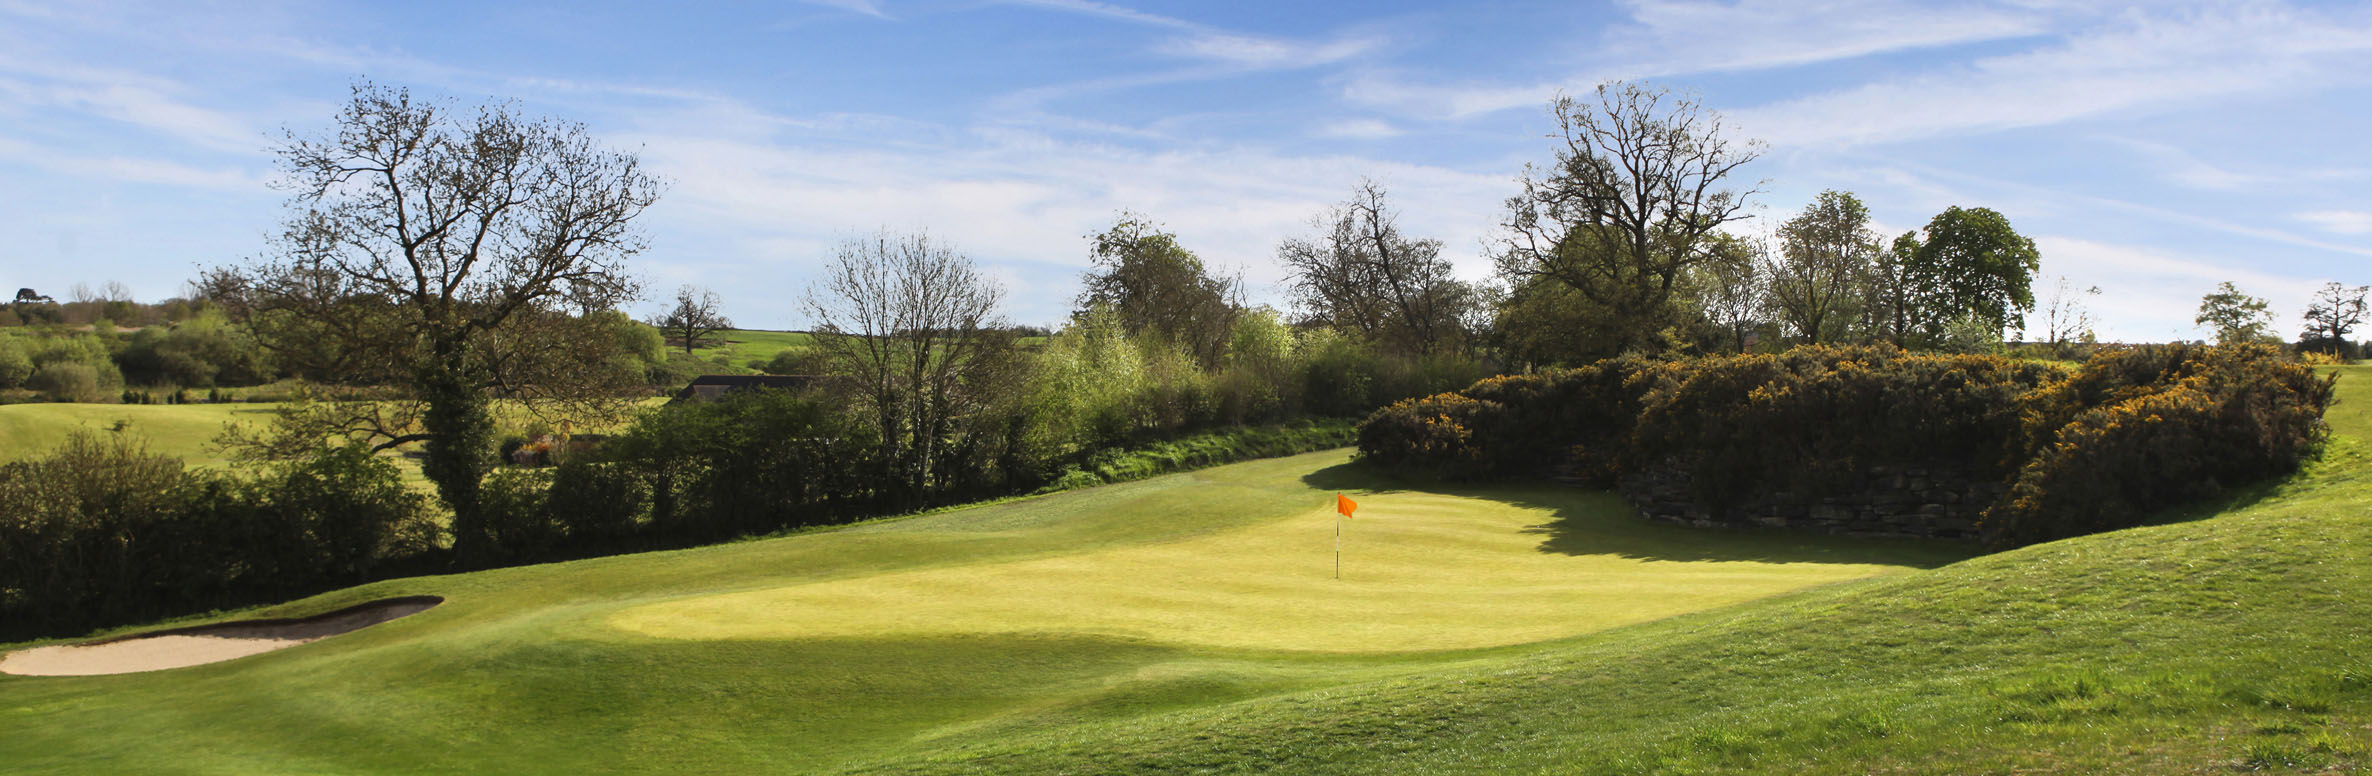 Golf Course Image - Cumberwell Park Orange No. 18